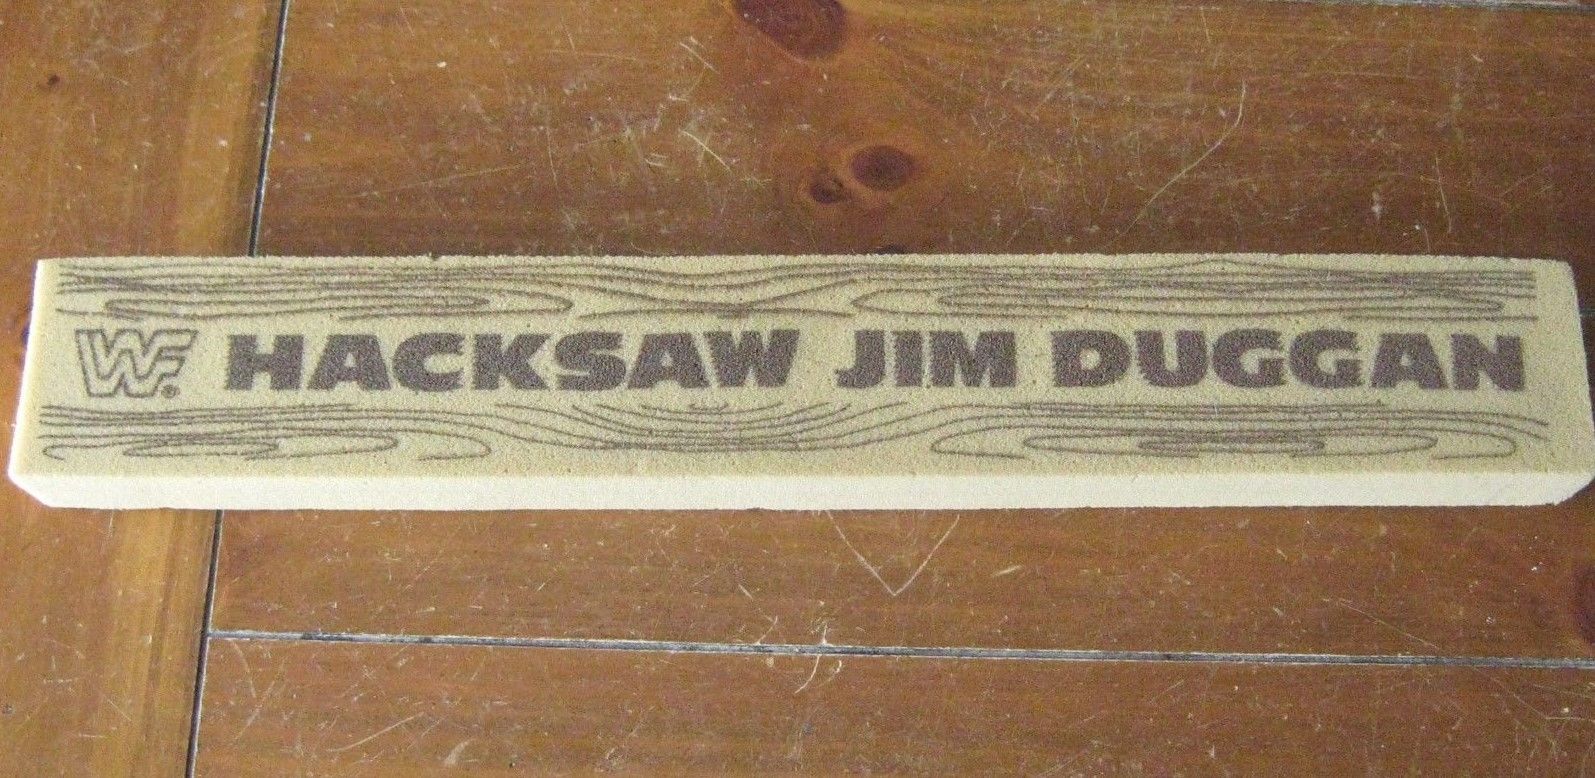 WWF Hacksaw Jim Duggan Foam 2X4 1